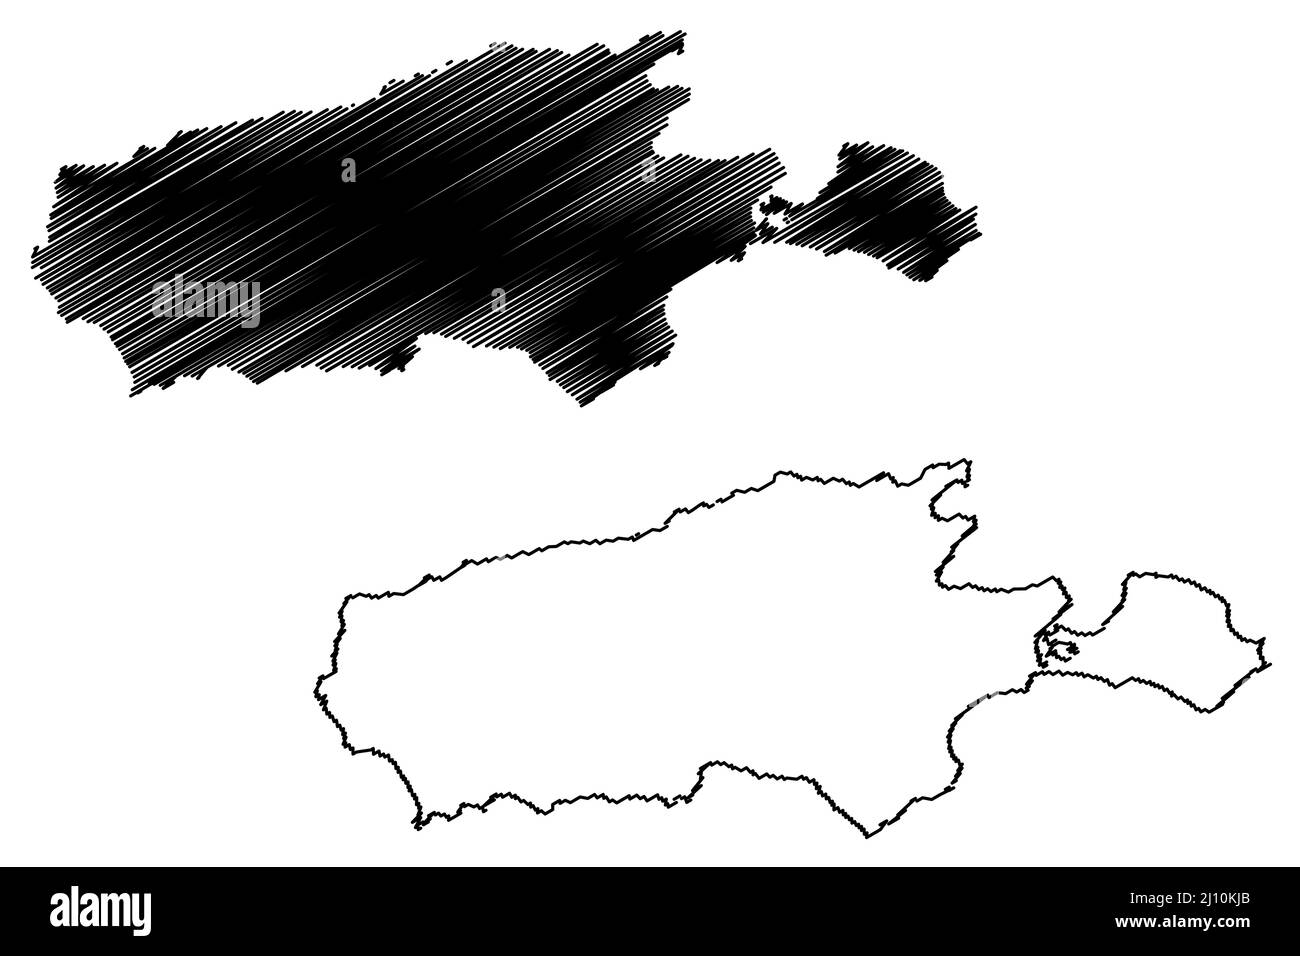 Isla Canguro (Great Australian Bight, Commonwealth of Australia) ilustración de vectores de mapa, boceto de garabatos Karta Pintingga o mapa del pueblo de Kartan Ilustración del Vector